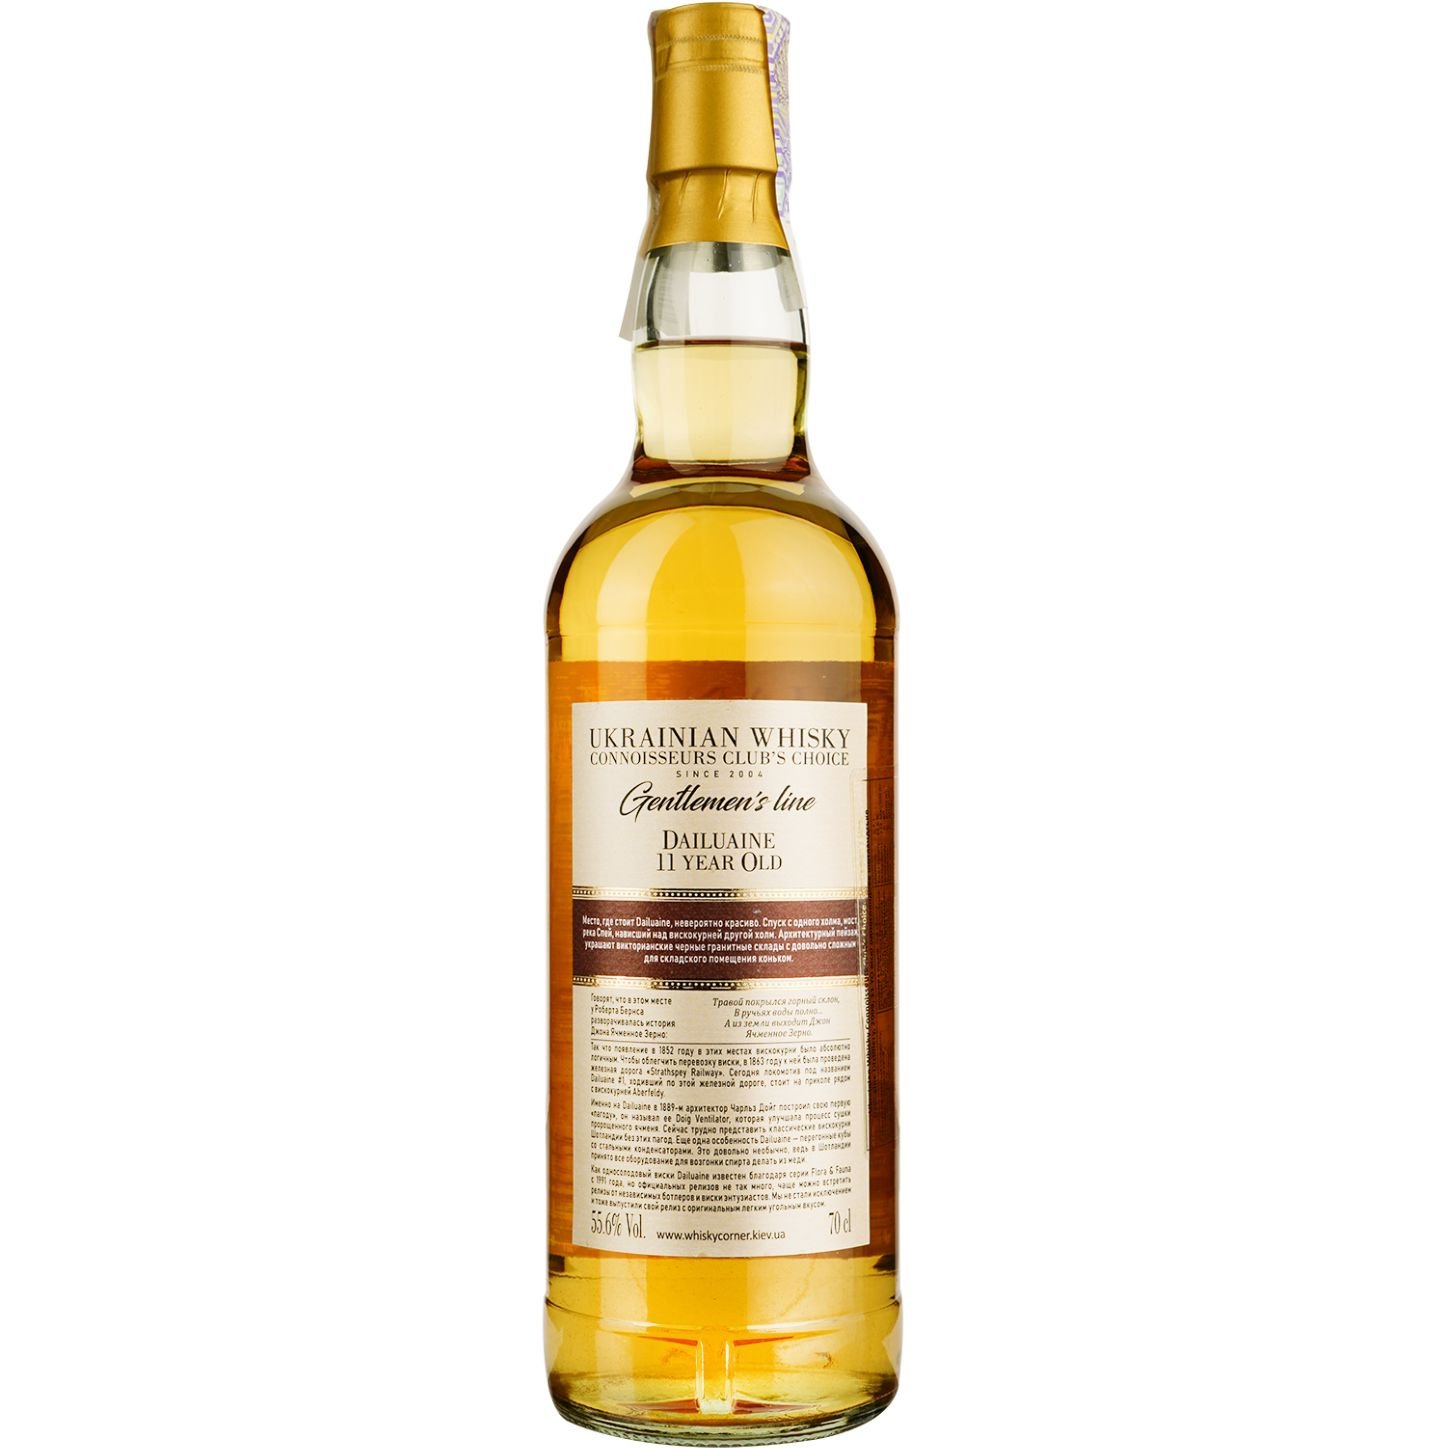 Виски Dailuaine 11 Years Old Single Malt Scotch Whisky, в подарочной упаковке, 55,6%, 0,7 л - фото 4